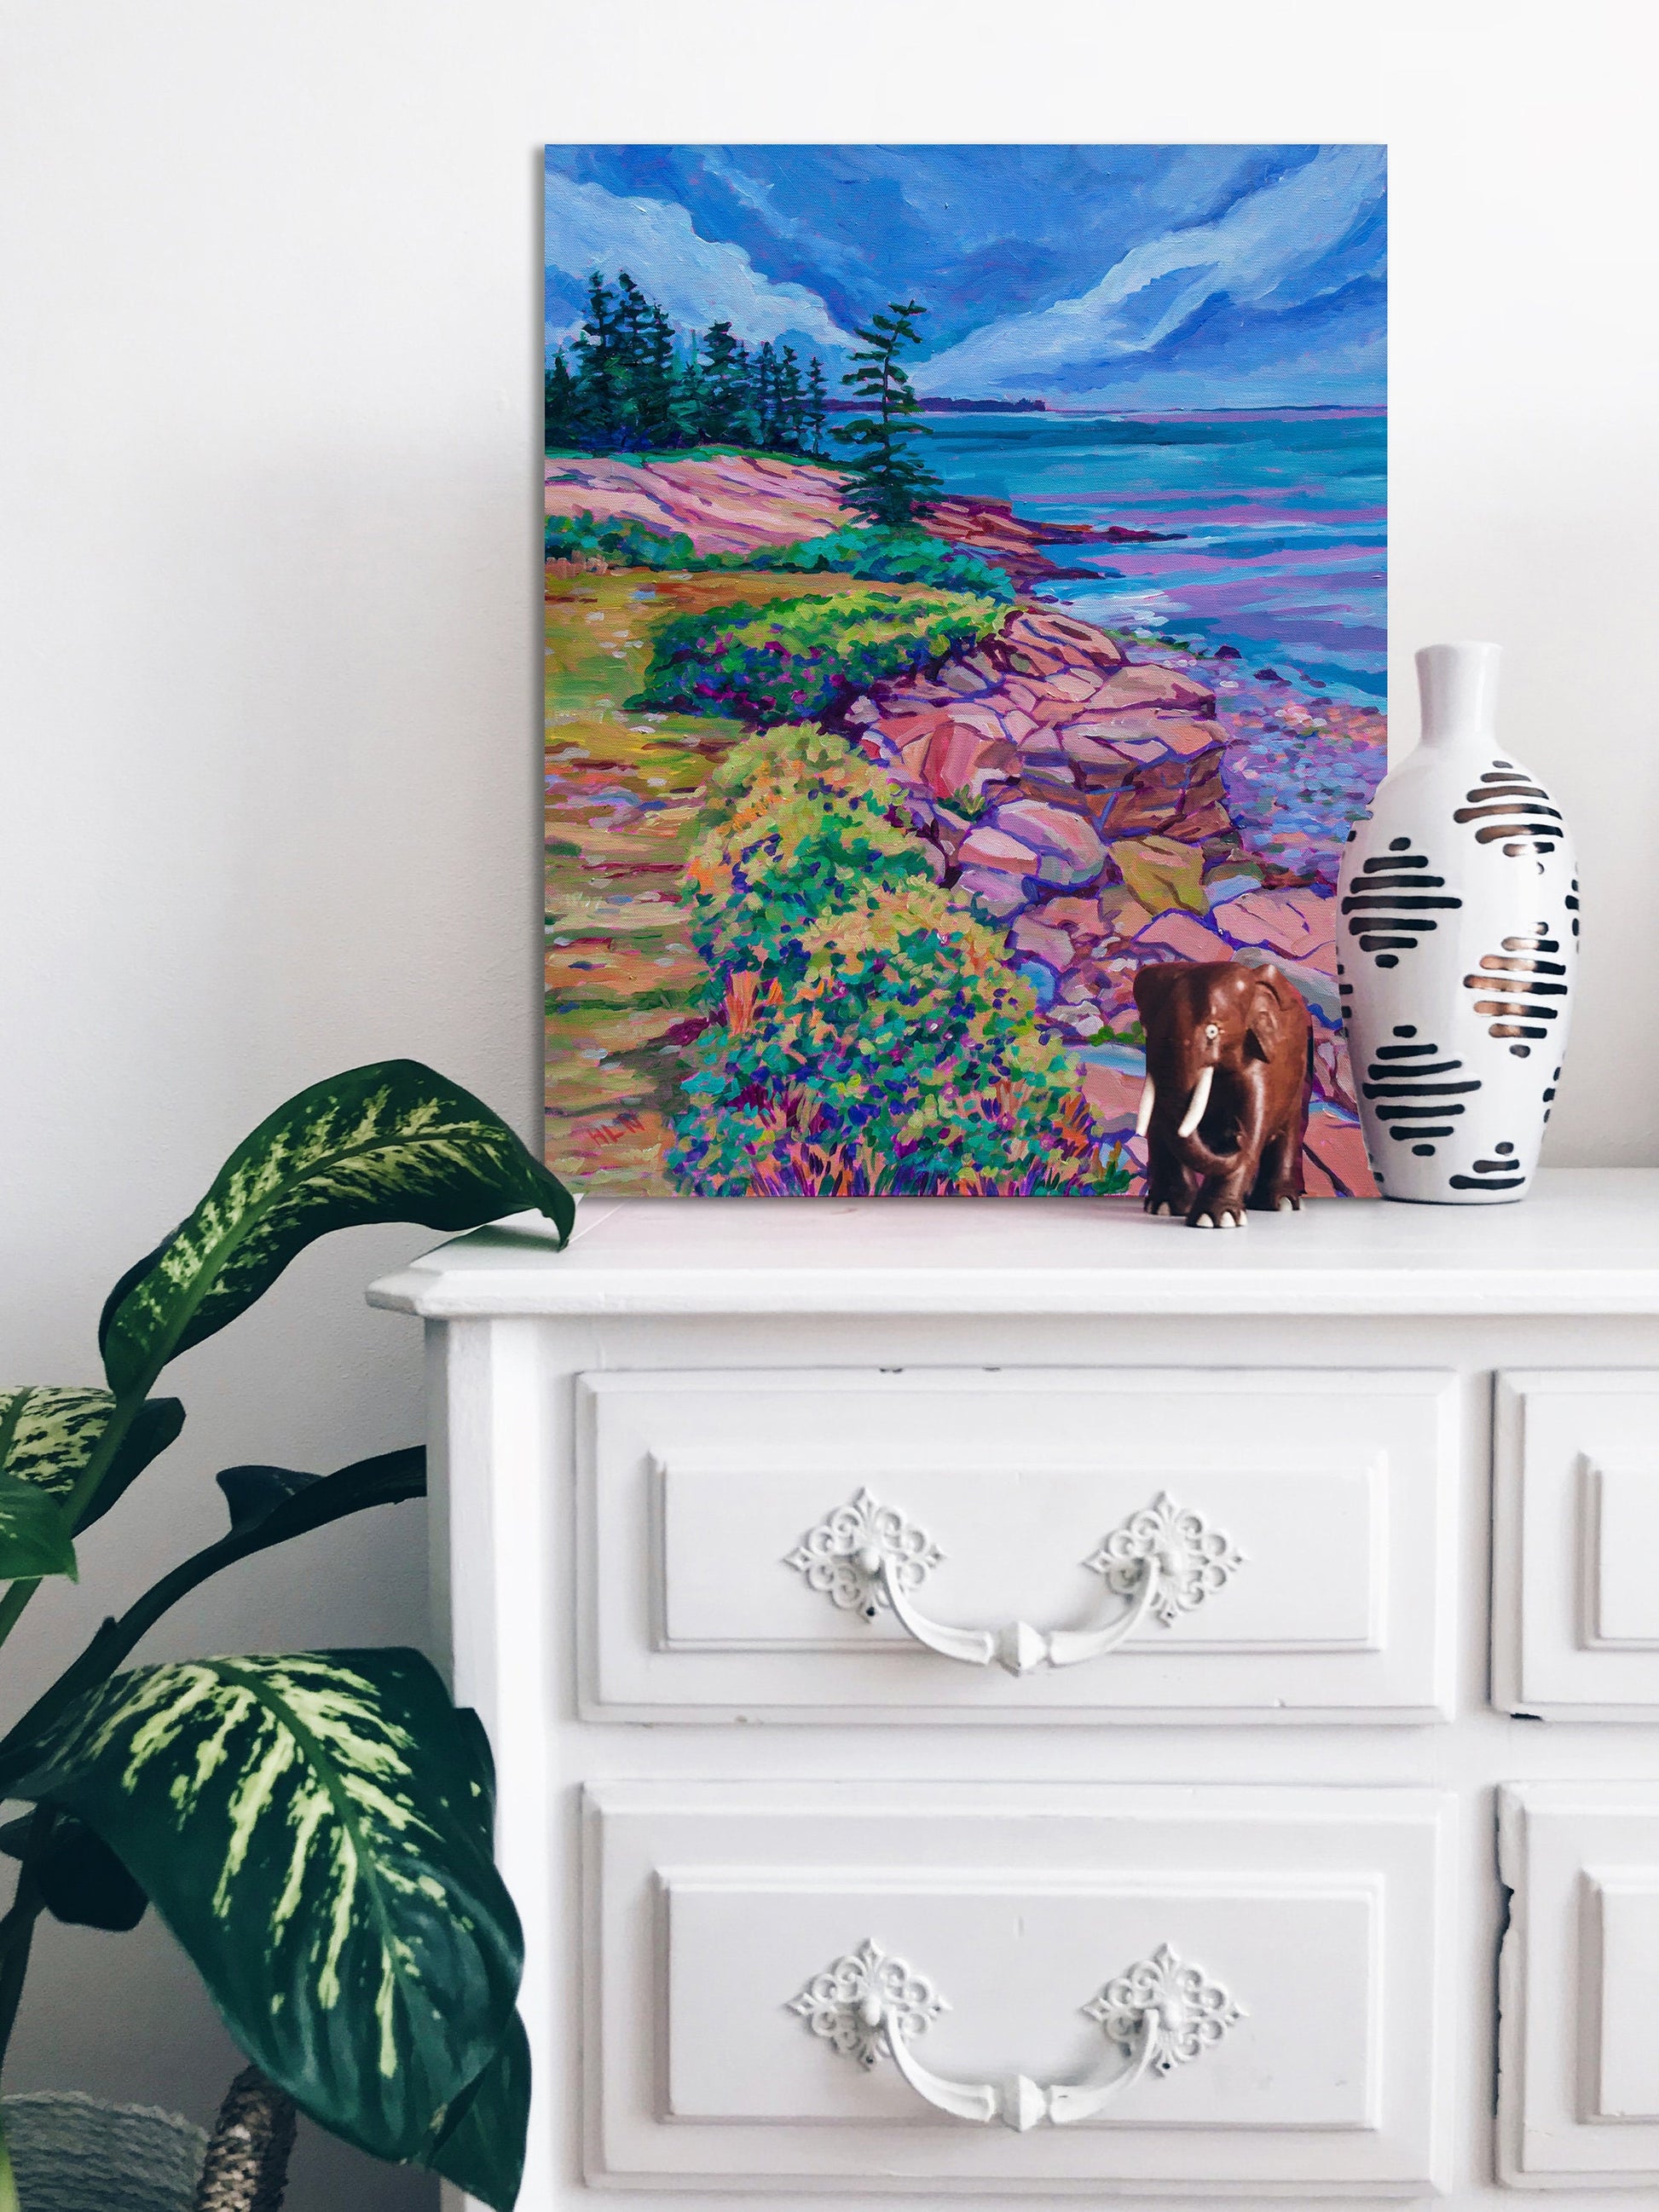 Mount Desert Island coastline painting on dresser with vase